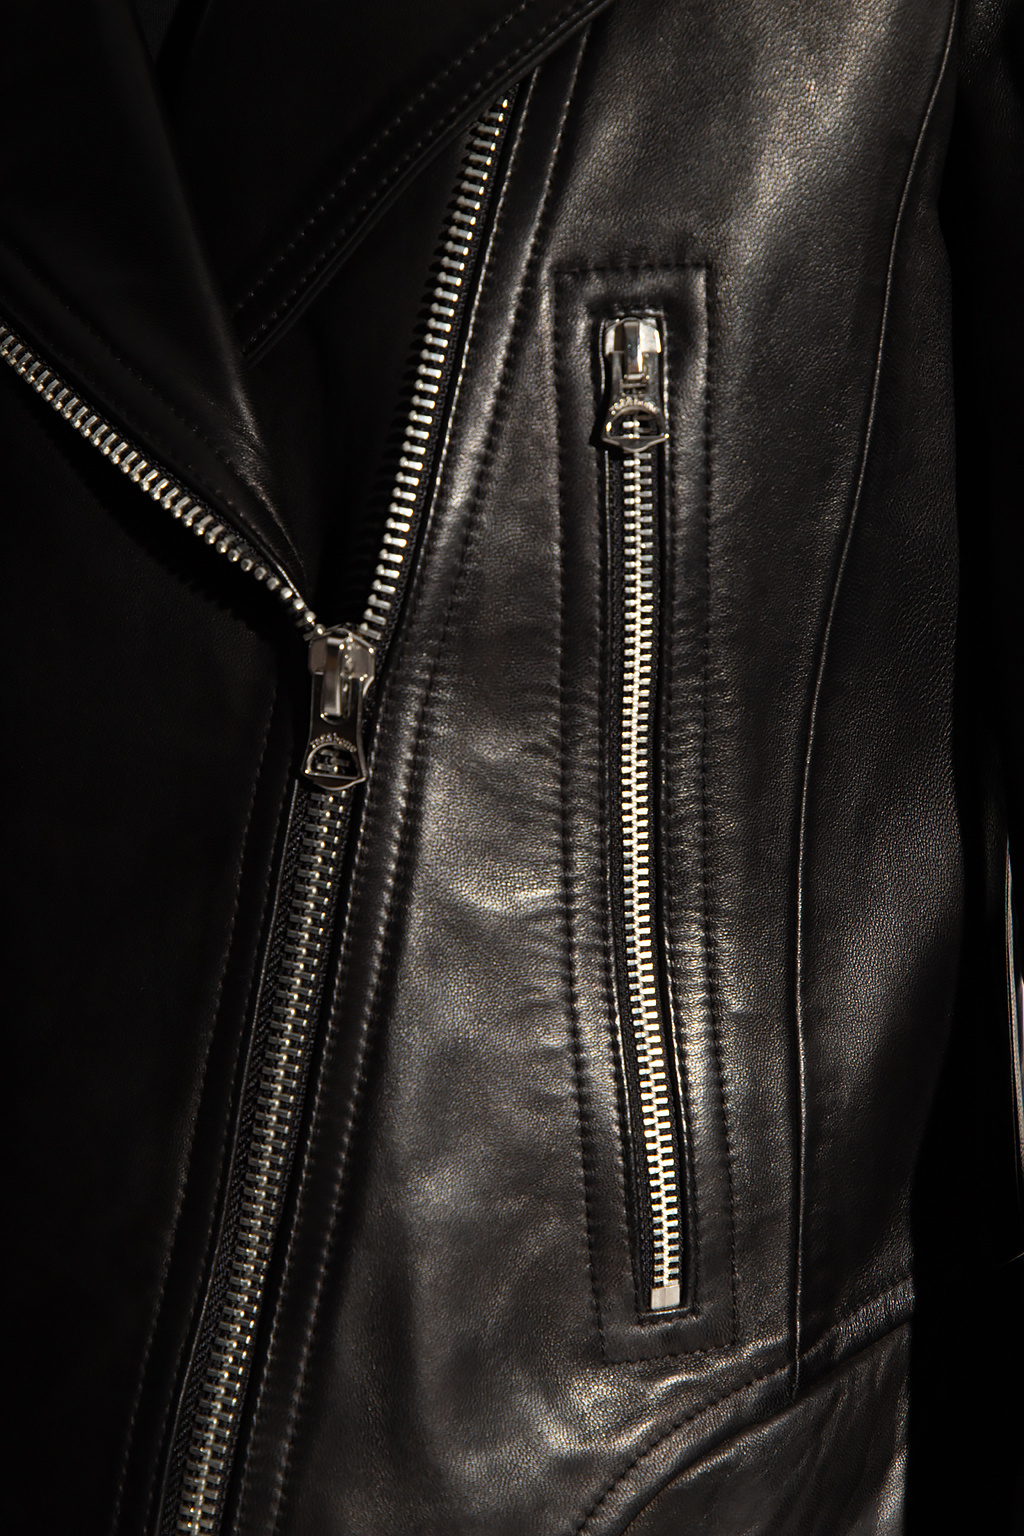 Louis Vuitton Pre-owned Women's Leather Biker Jacket